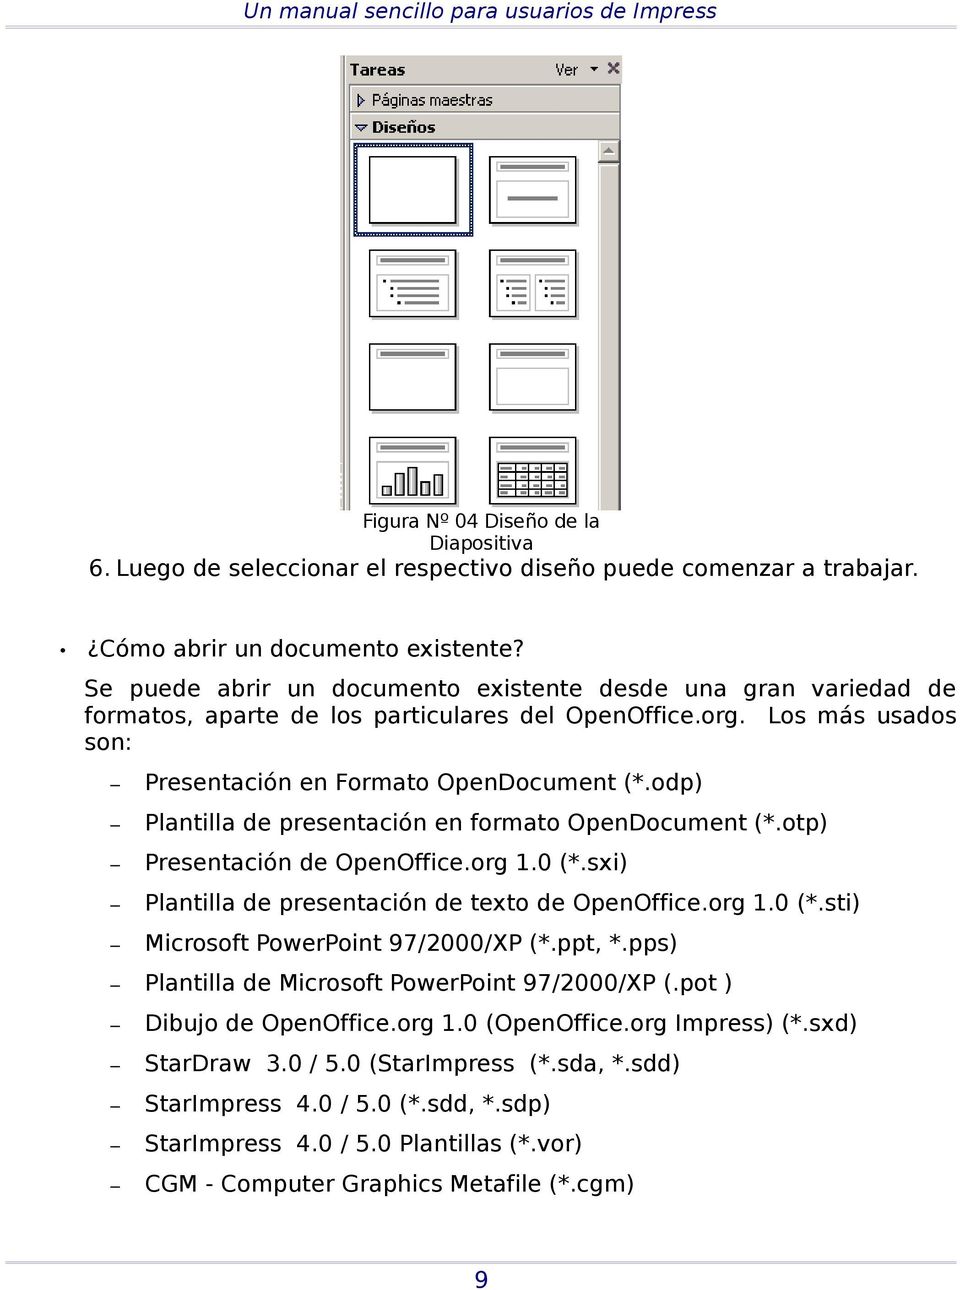 odp) Plantilla de presentación en formato OpenDocument (*.otp) Presentación de OpenOffice.org 1.0 (*.sxi) Plantilla de presentación de texto de OpenOffice.org 1.0 (*.sti) Microsoft PowerPoint 97/2000/XP (*.